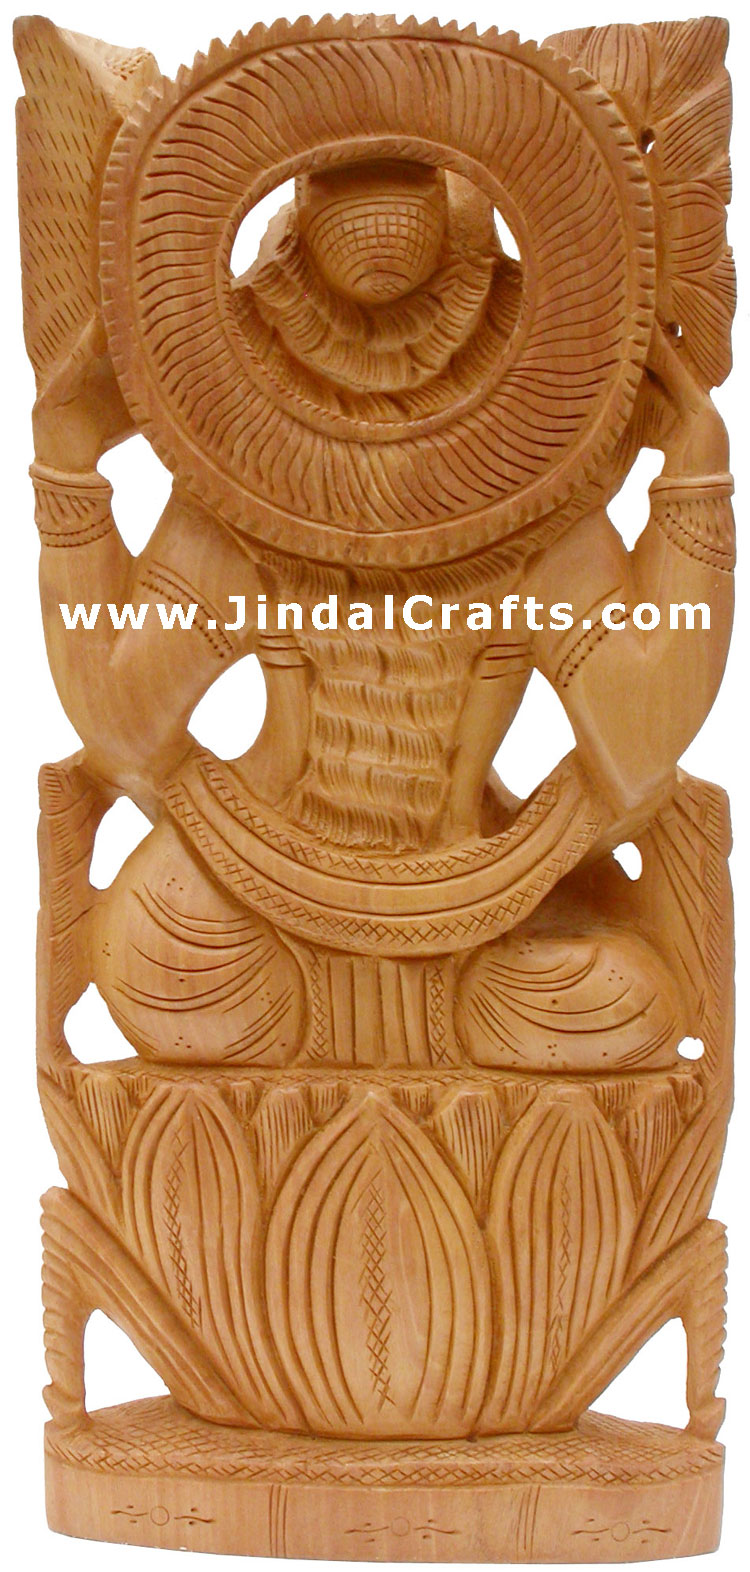 Handcrafted Wooden Goddess Saraswati Hindu Figurine Art